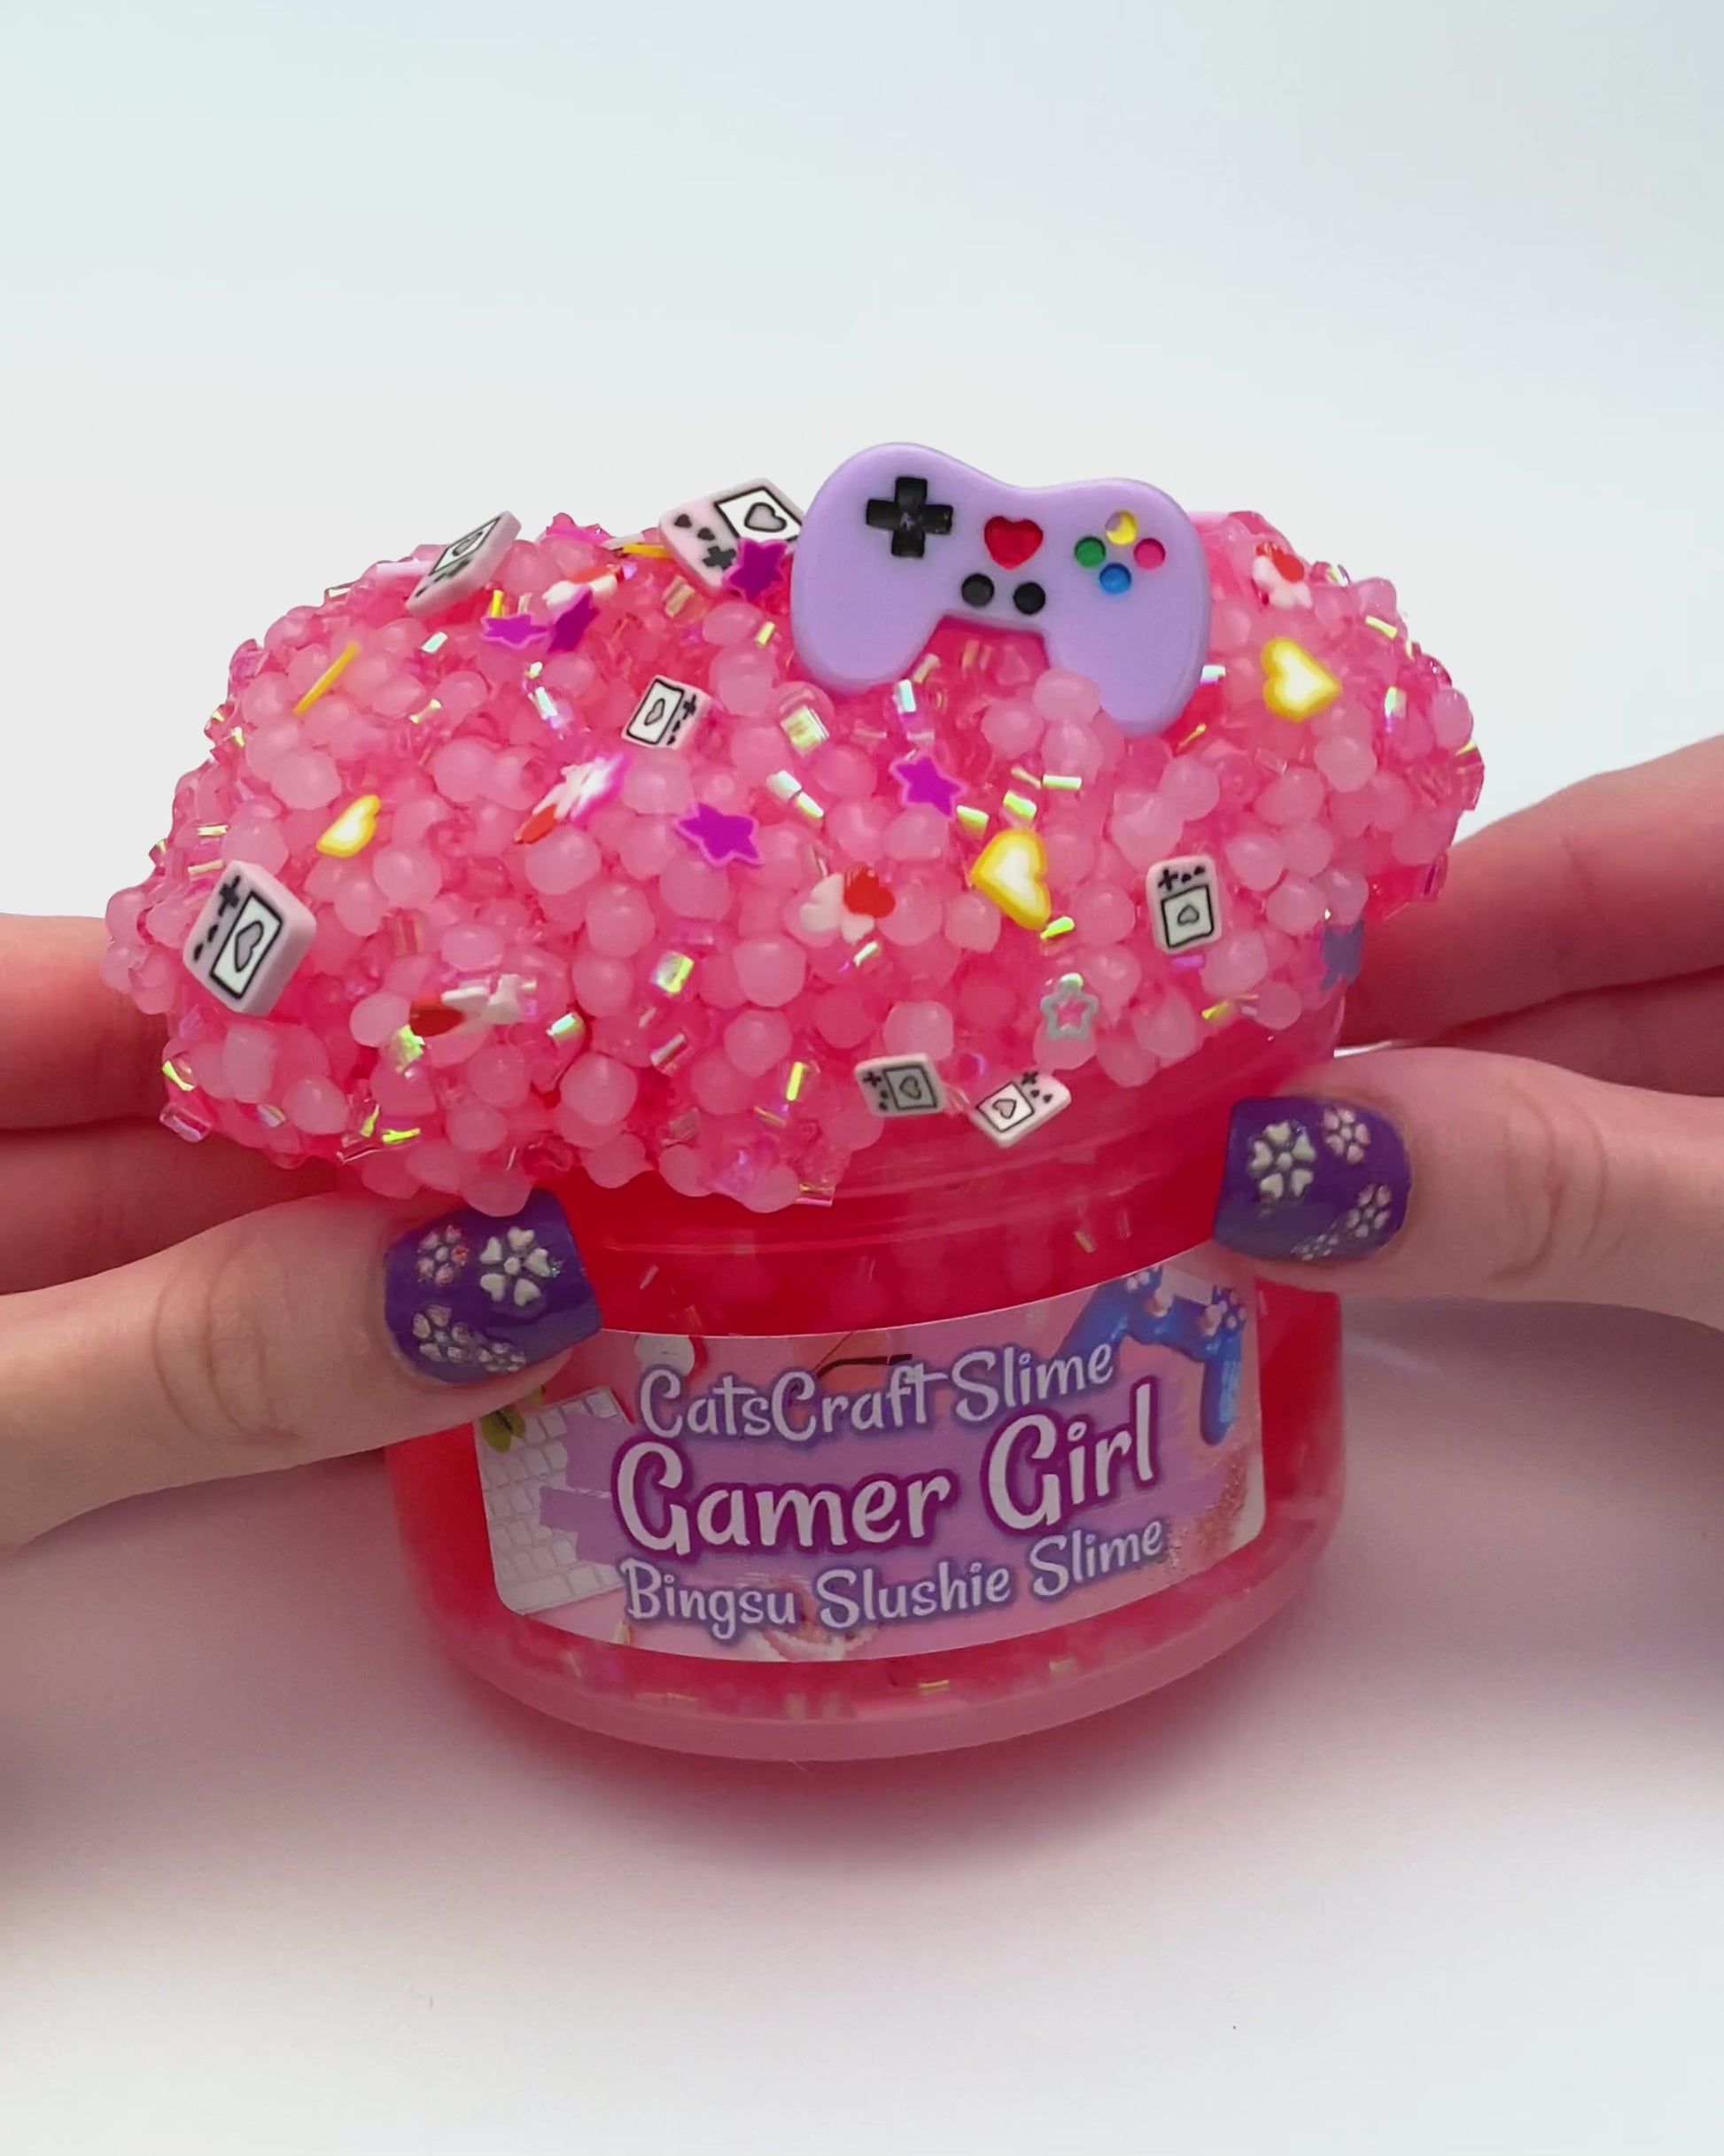 Bingsu Slushie Slime Gamer Girl SCENTED pink crystal clear